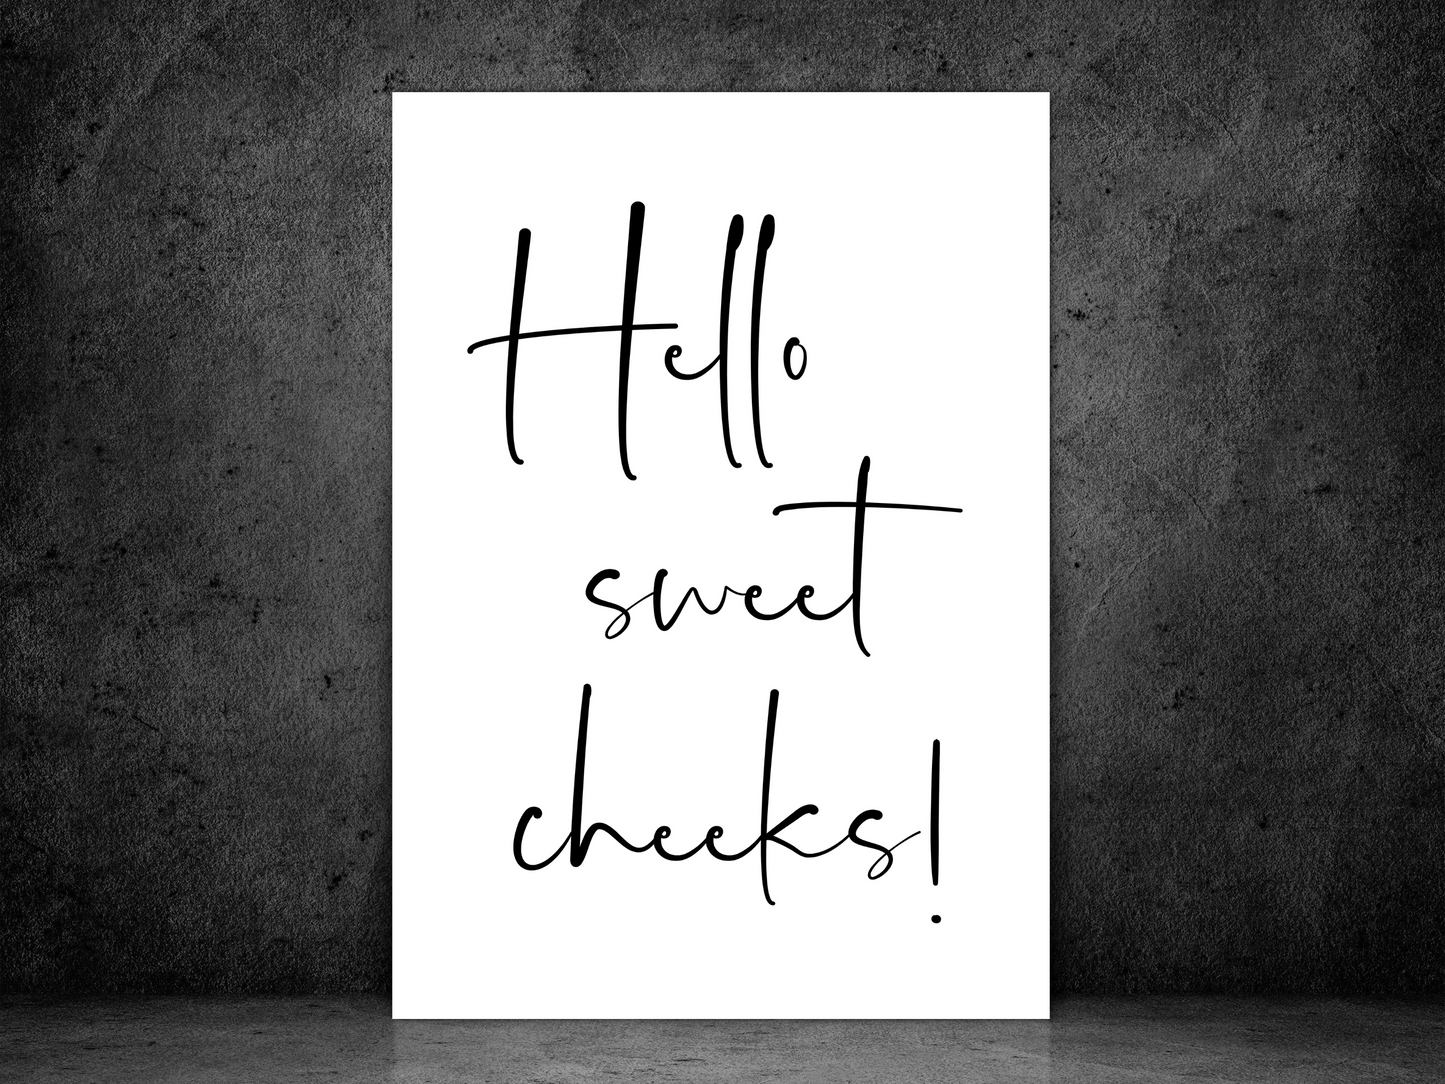 Hello Sweet Cheeks Bathroom Print